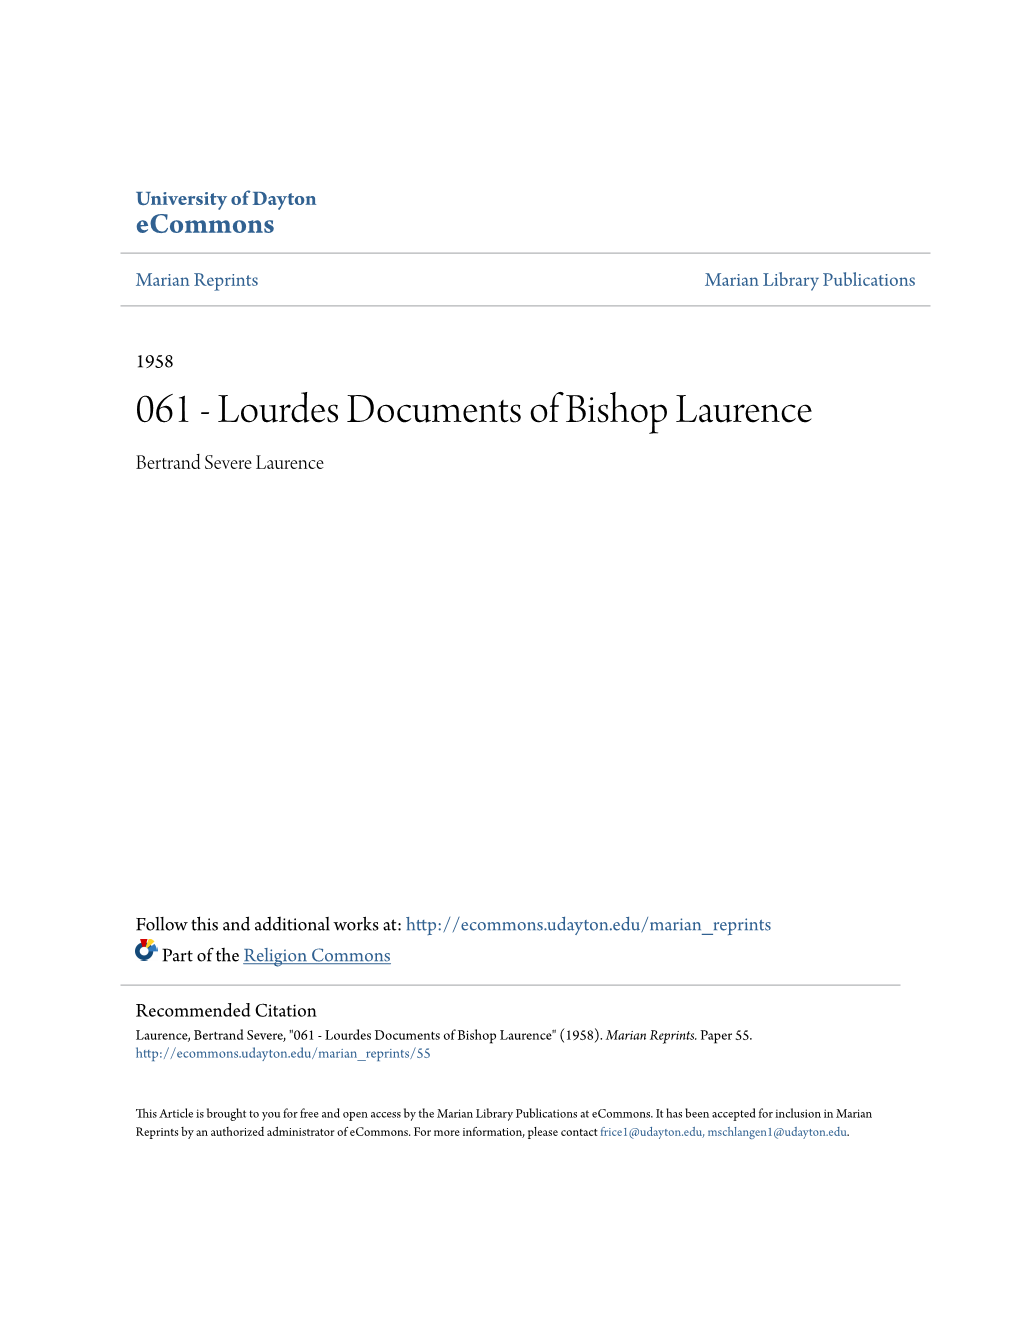 Lourdes Documents of Bishop Laurence Bertrand Severe Laurence